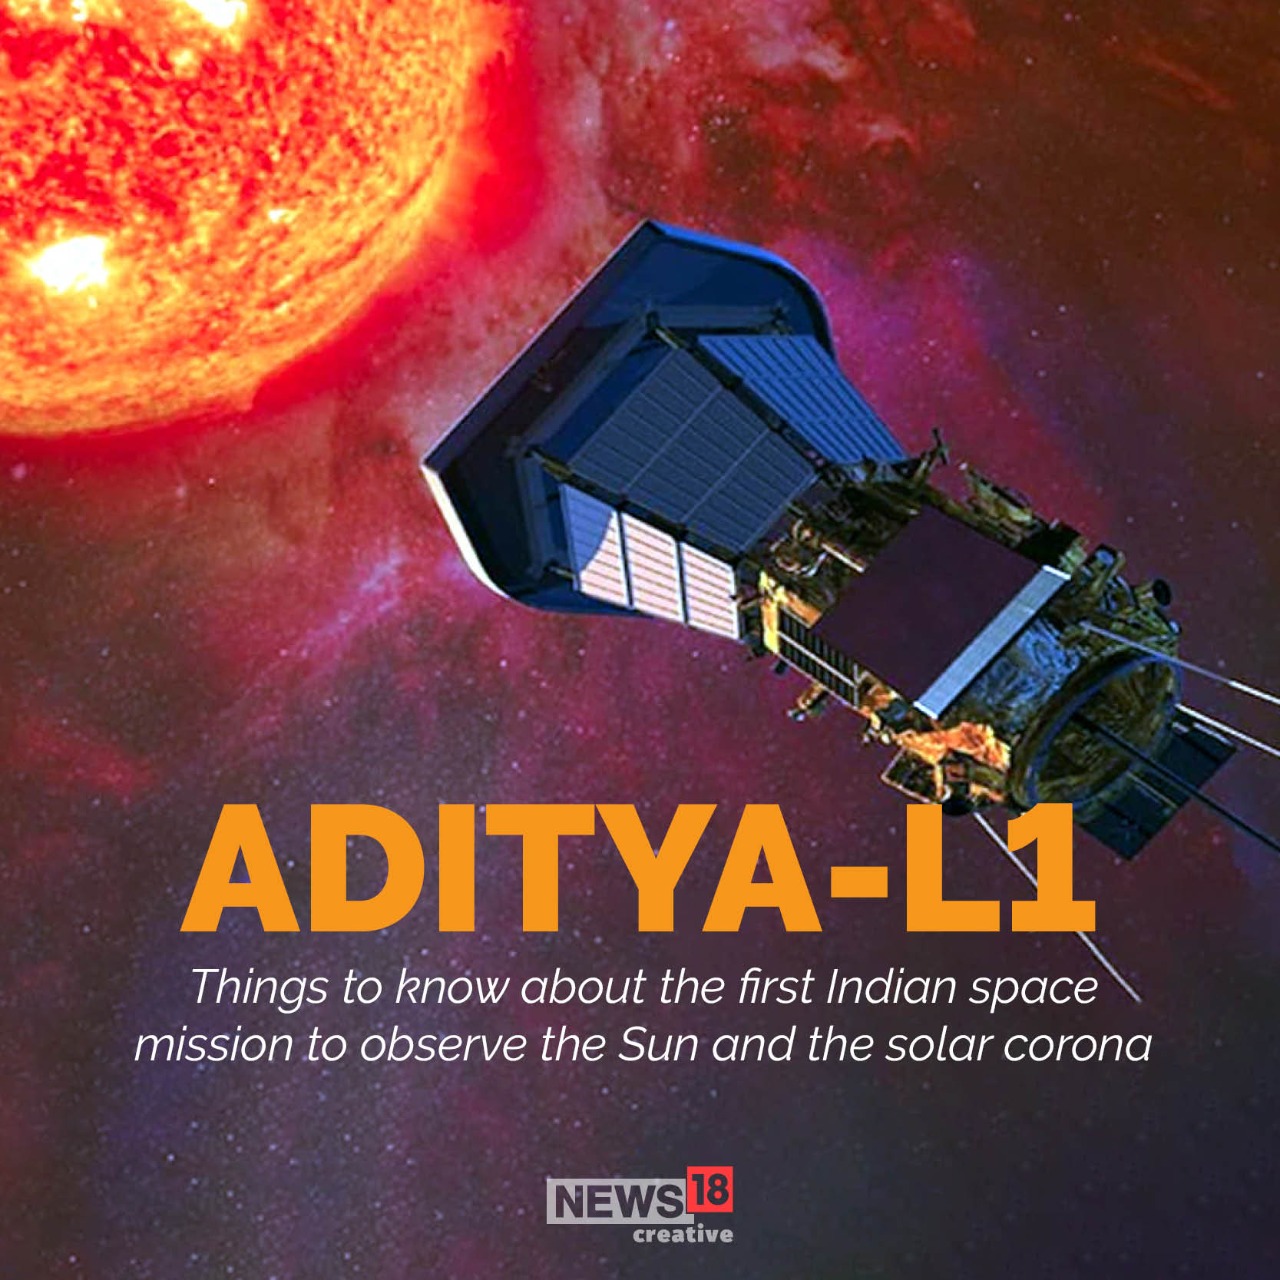 write a speech on aditya l1